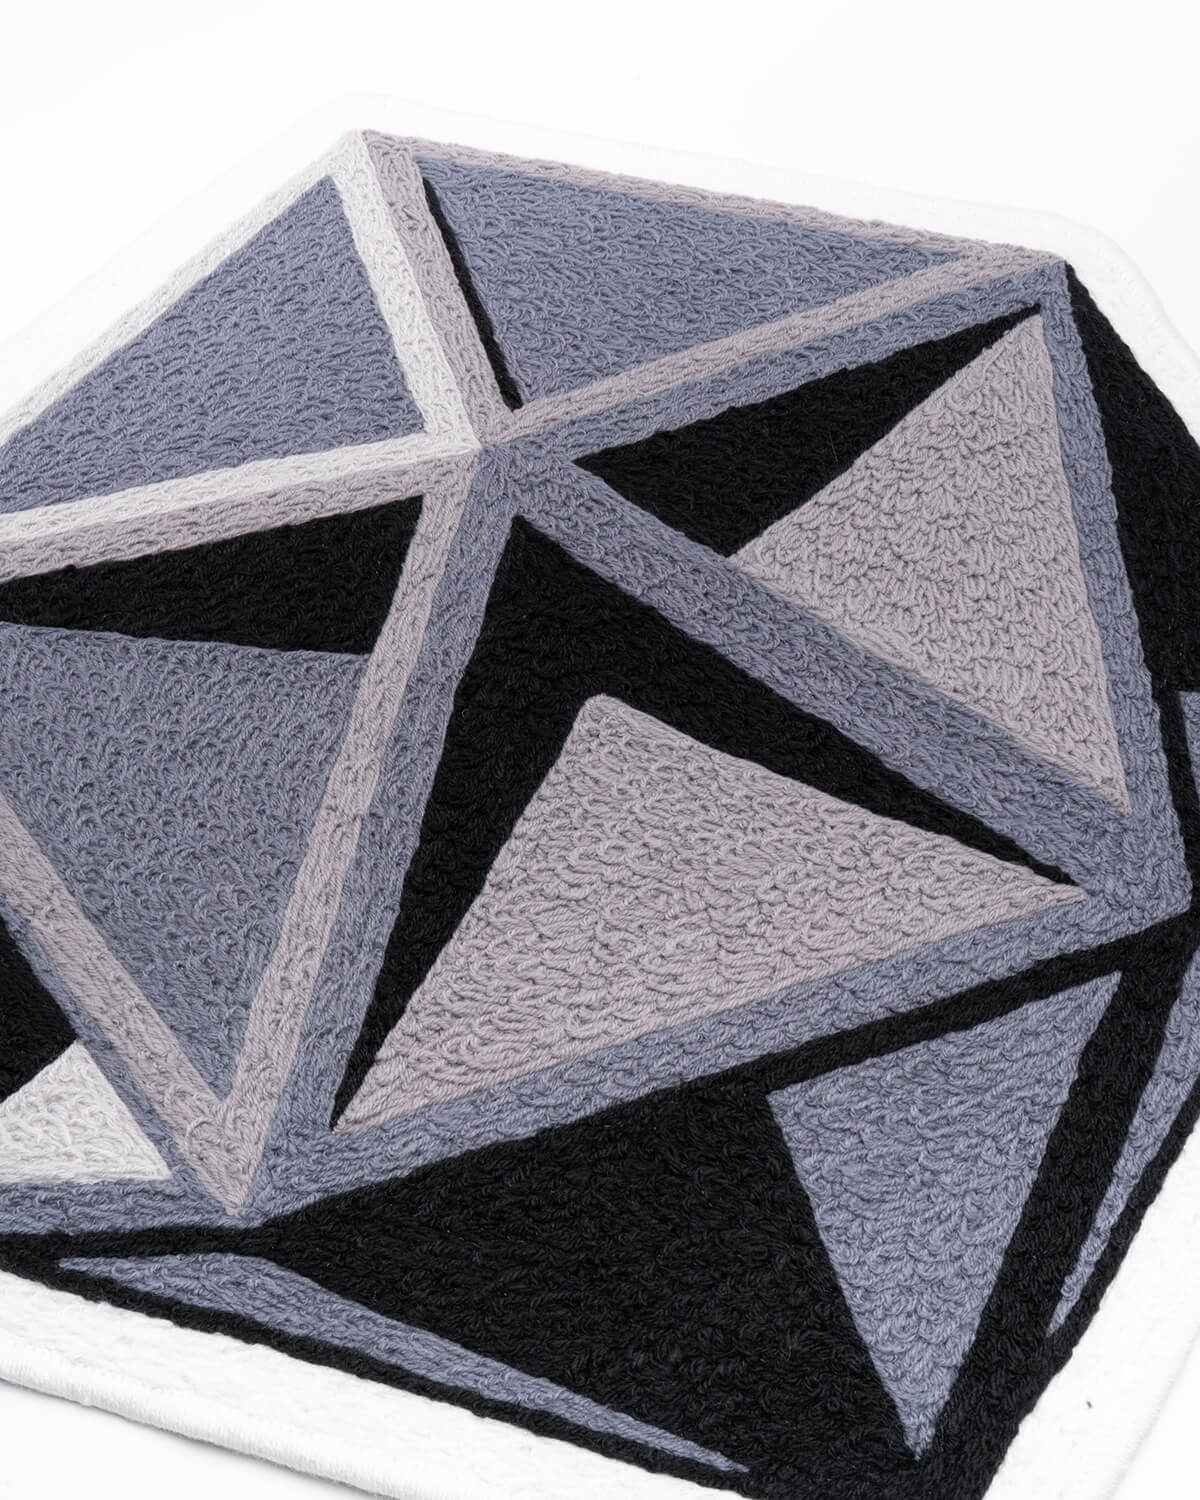 Angela Su Polyhedra Carpet